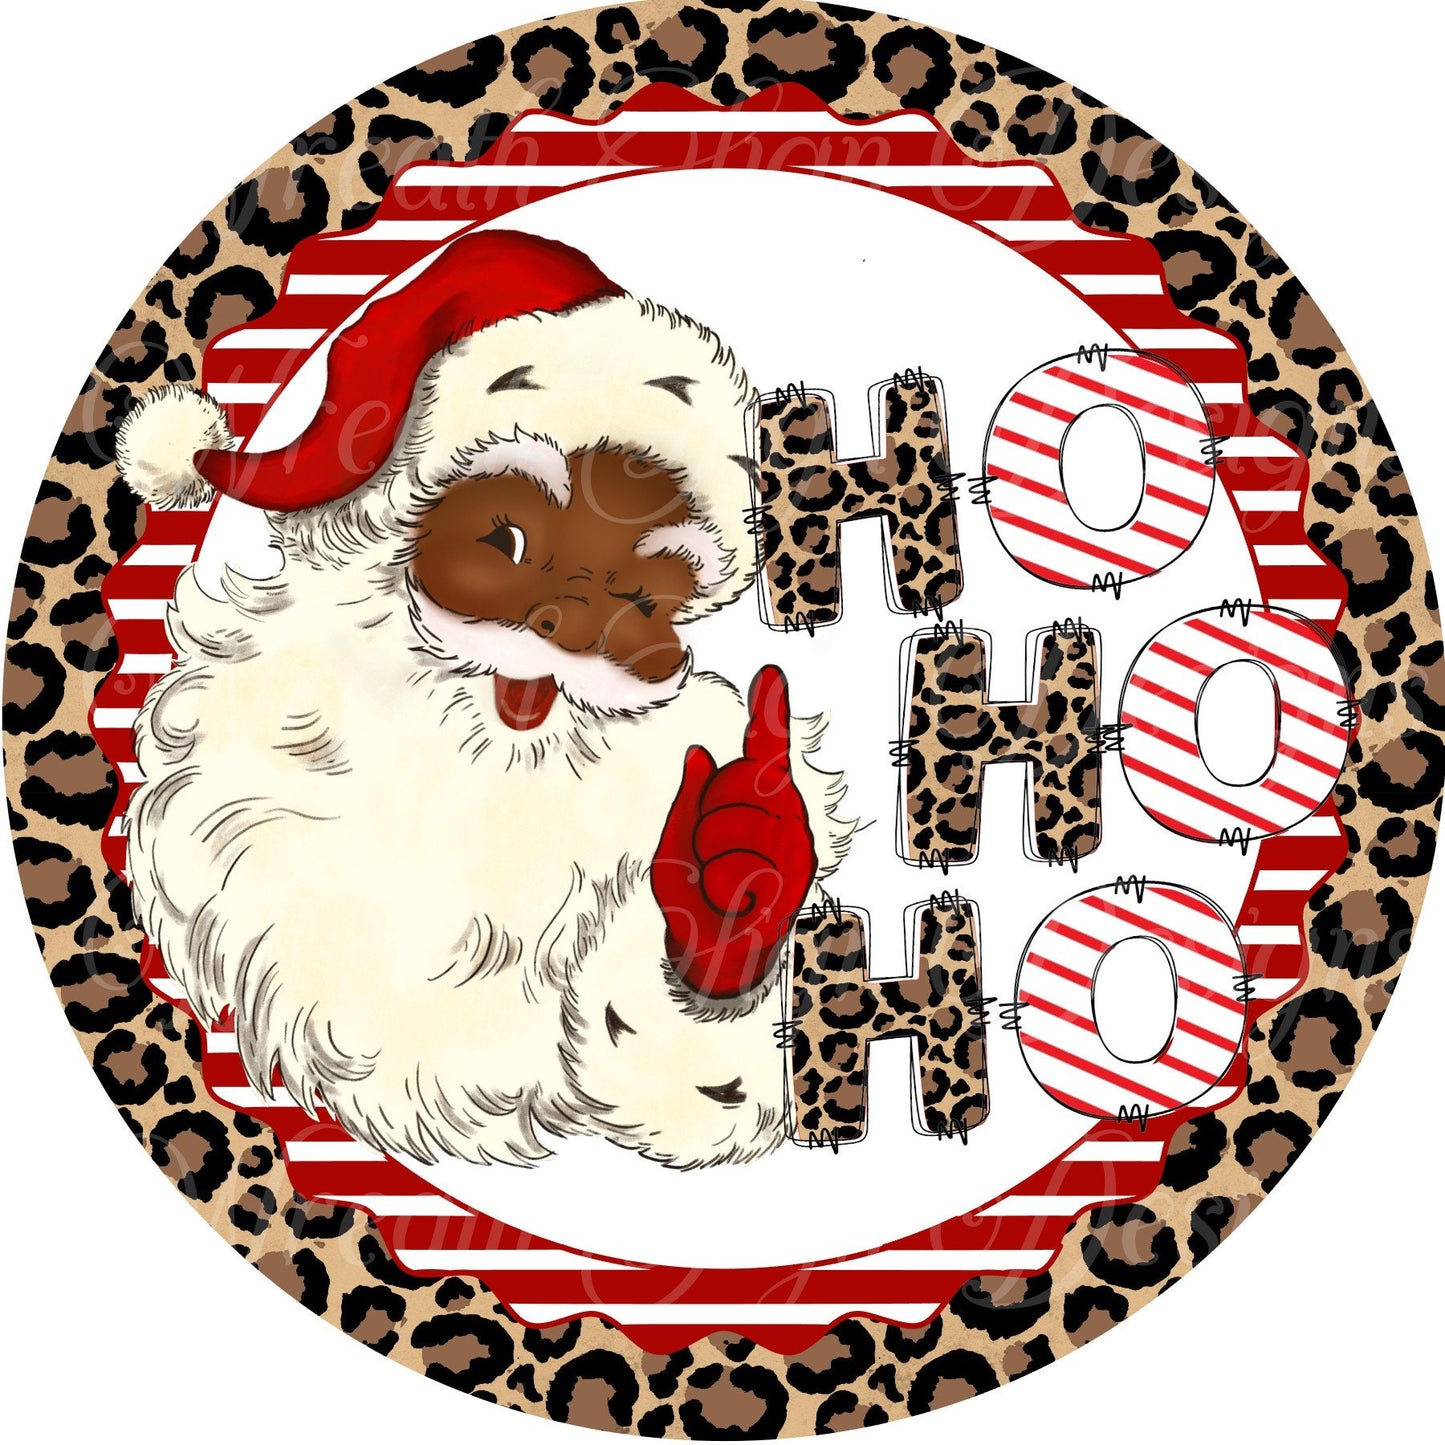 Black Santa, Melanin, African American Santa, Ho Ho Ho Santa Claus Wreath center, Cheetah print St. Nick, Wreath sign, Wreath plaque